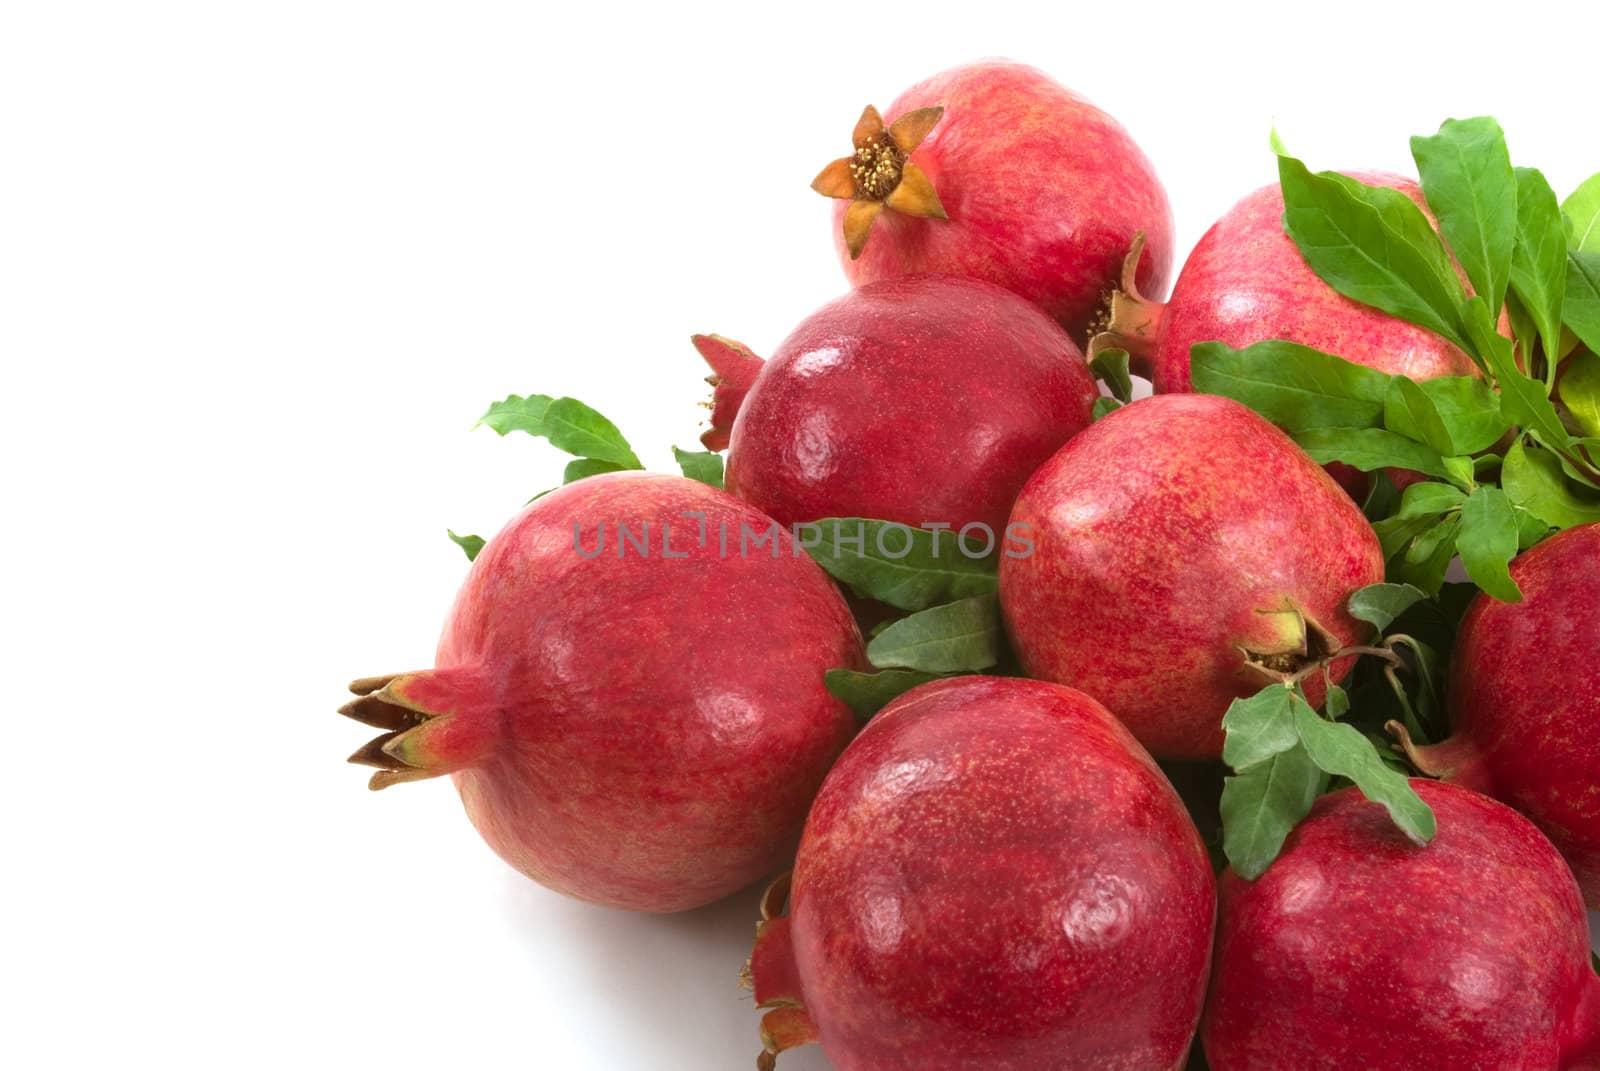 Organic pomegranates from my garden